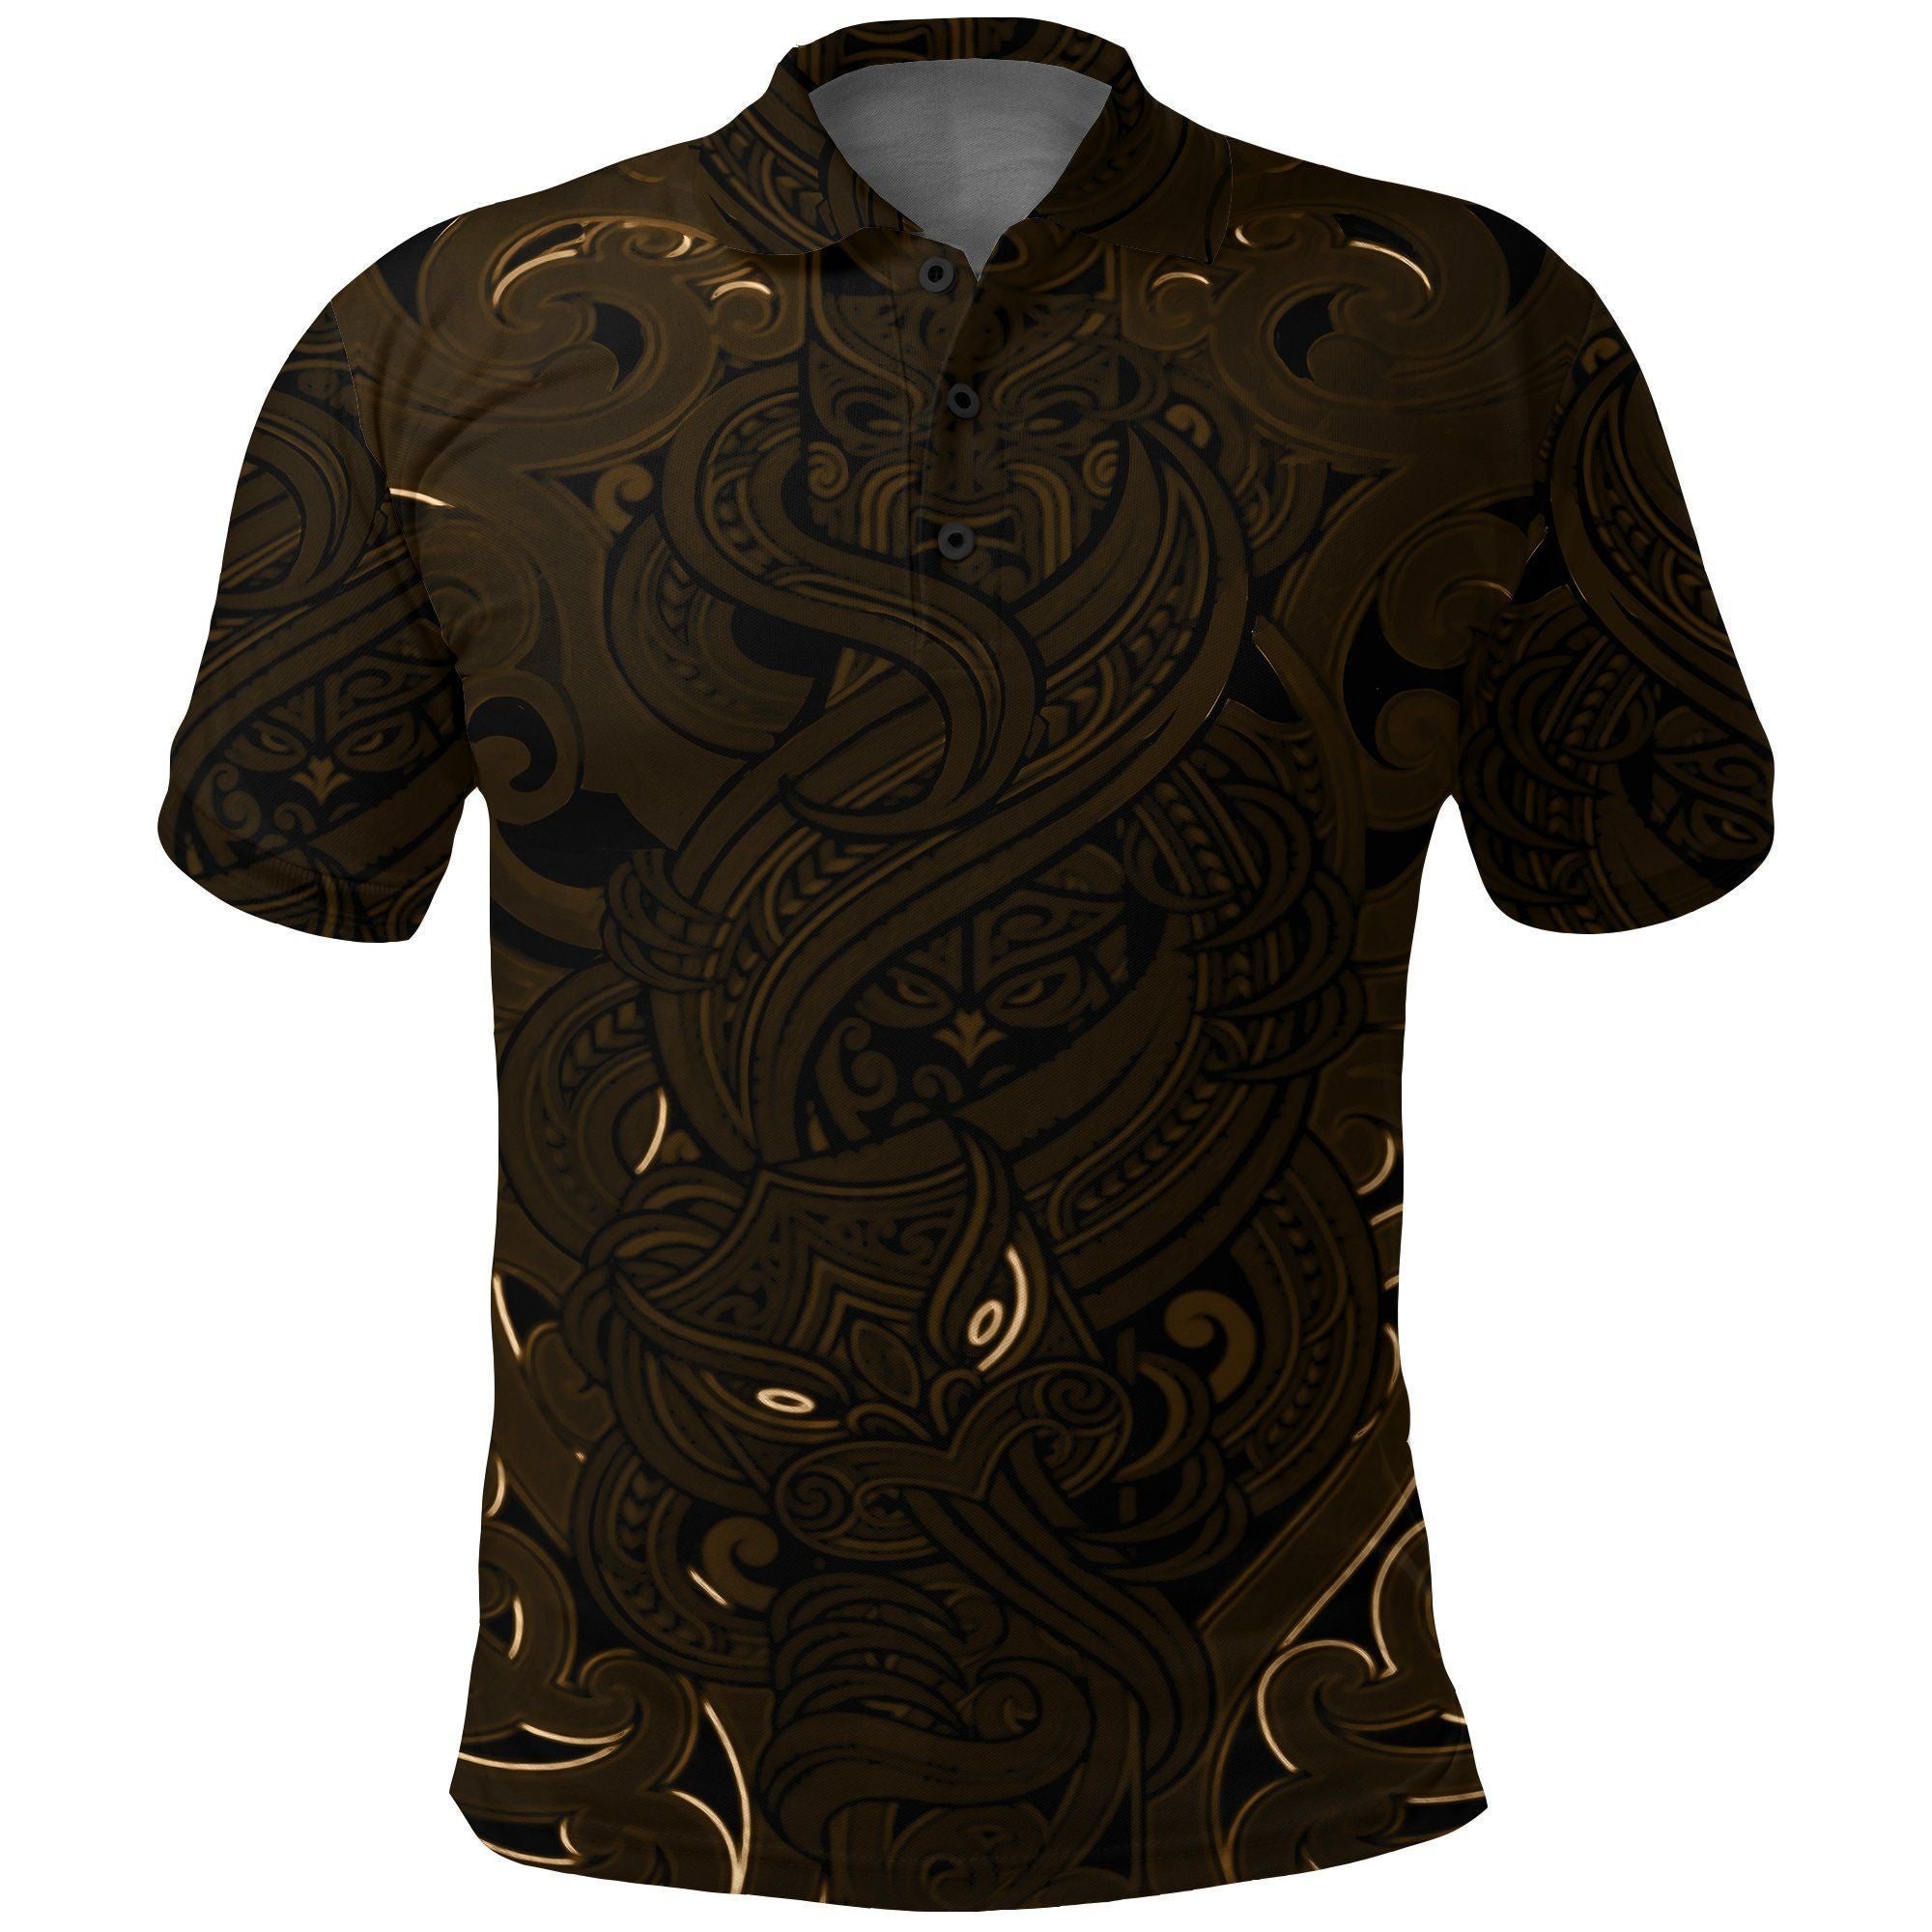 Polynesian Pride Apparel New Zealand Polo Shirt, Maori Gods Golf Shirt, Tumatauenga (God of War) Gold Unisex Gold - Polynesian Pride